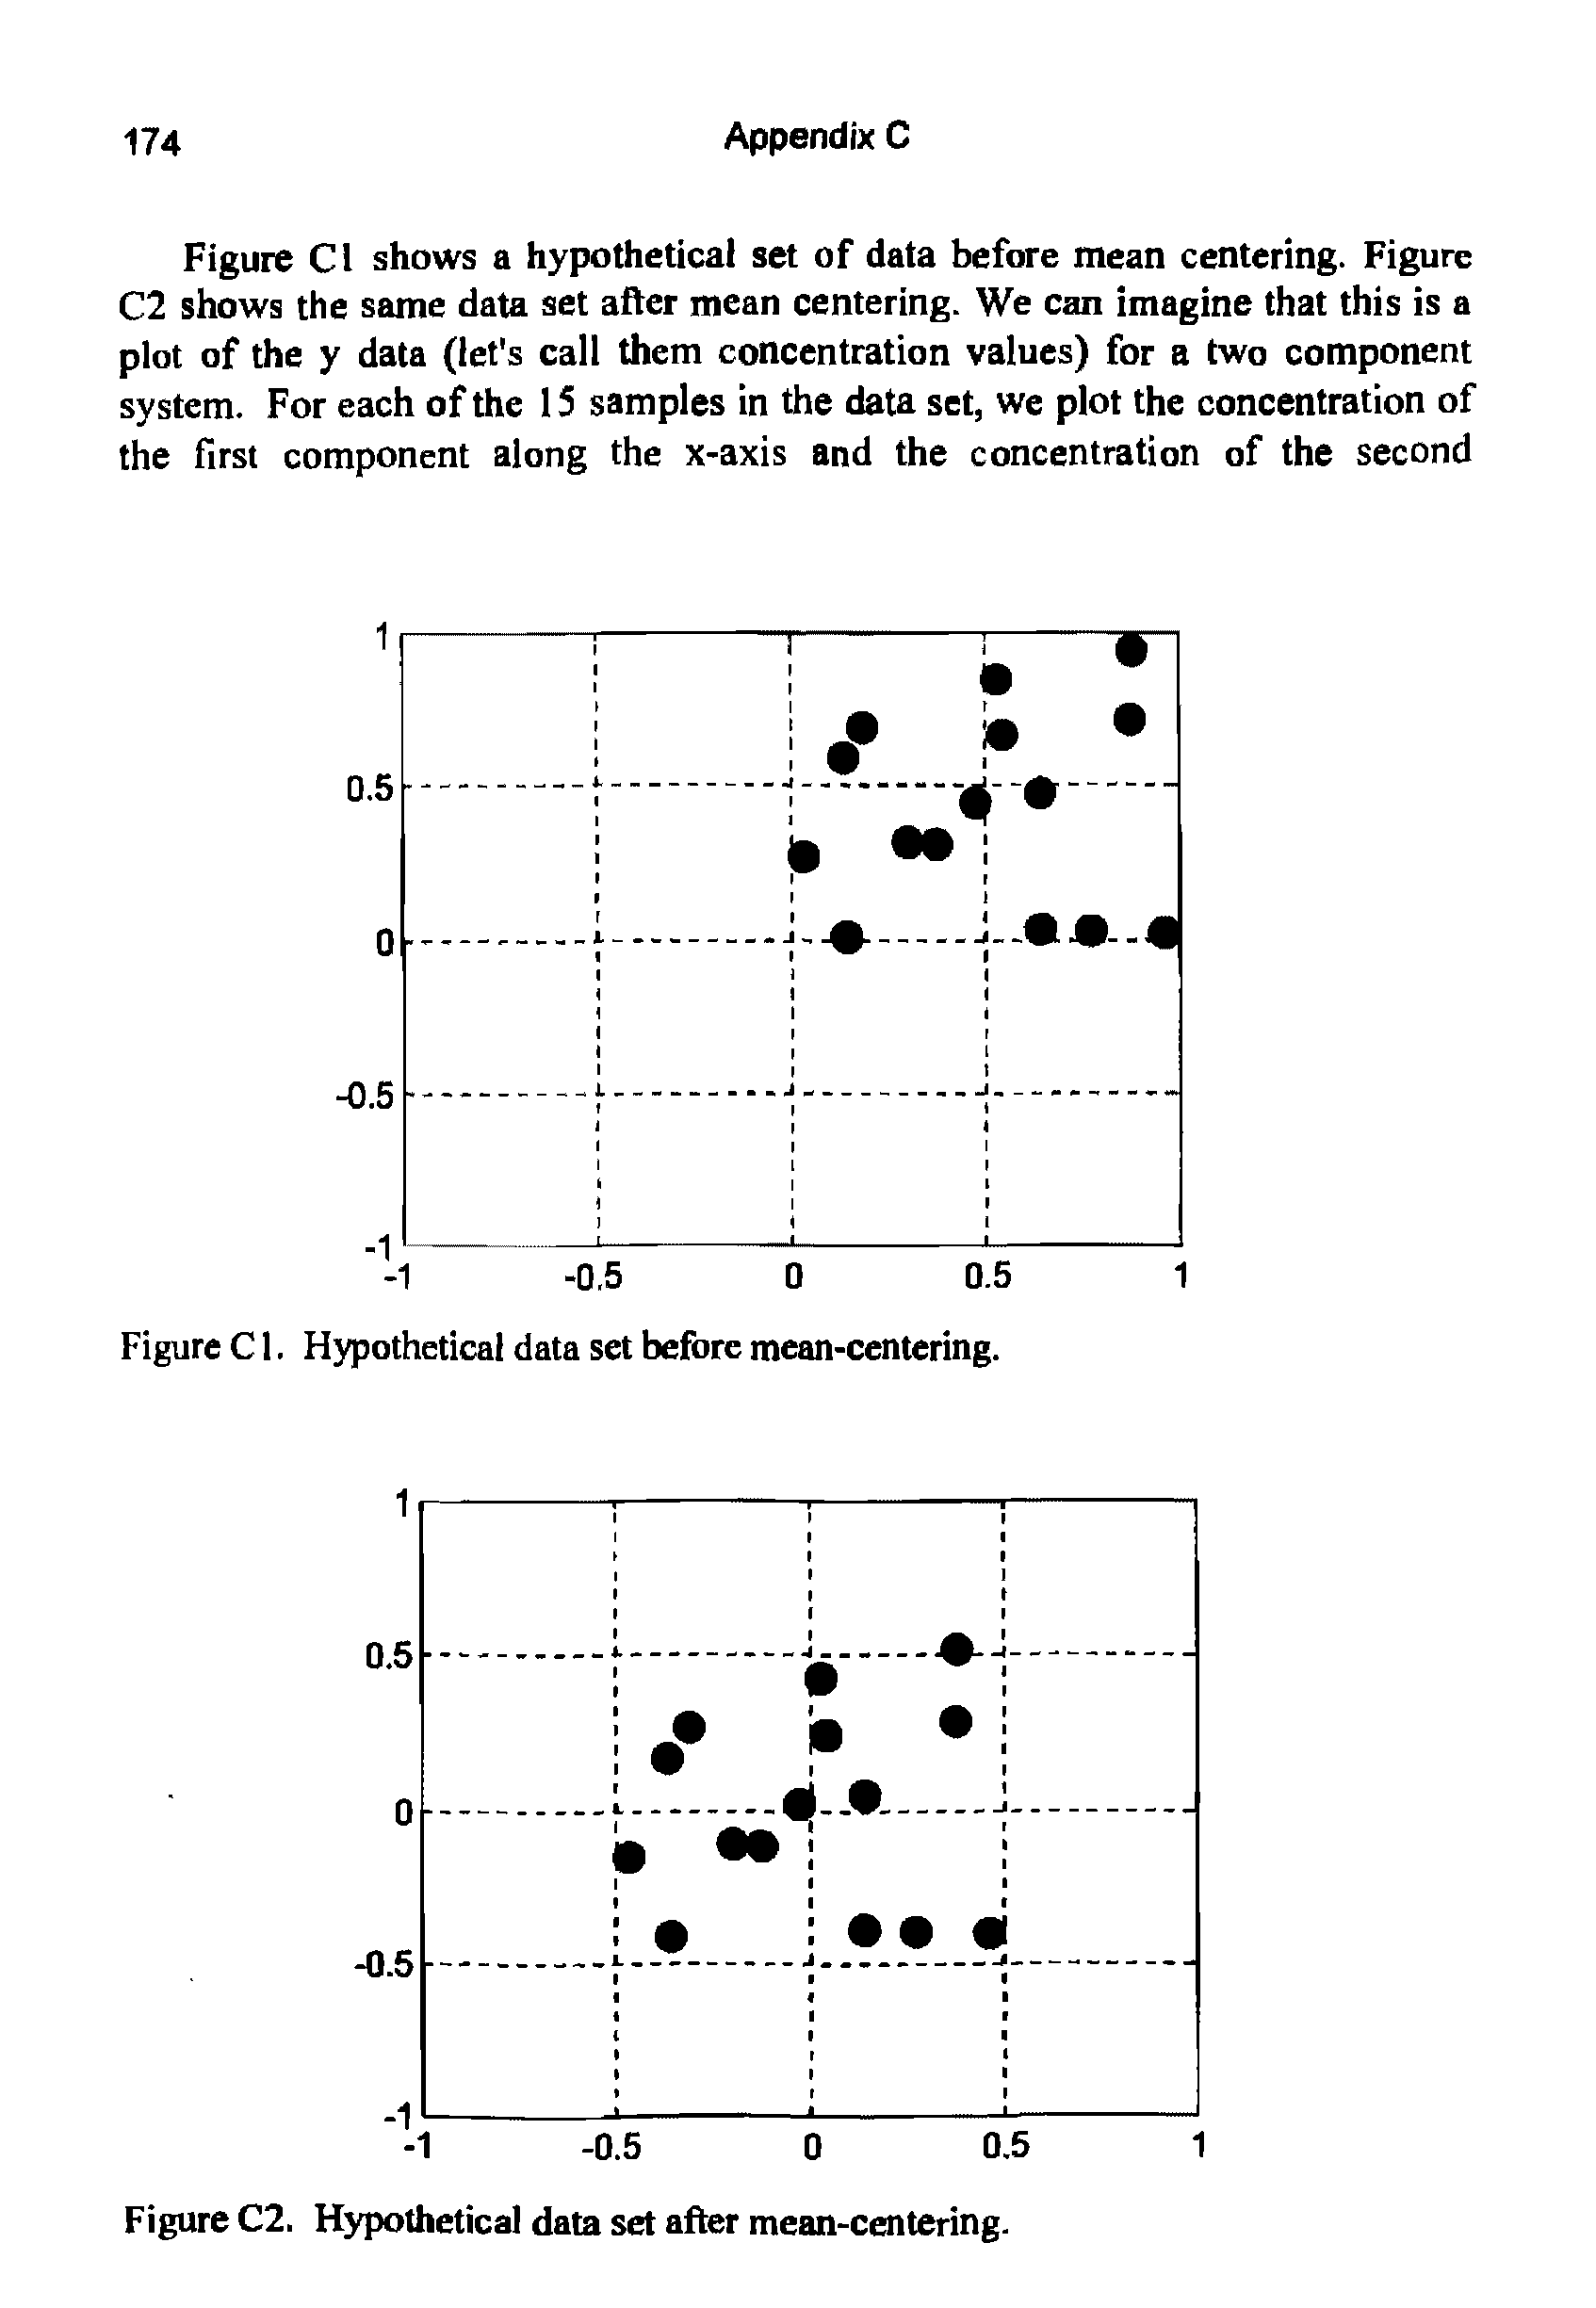 Figure C2. Hypothetical data set after mean-centering.